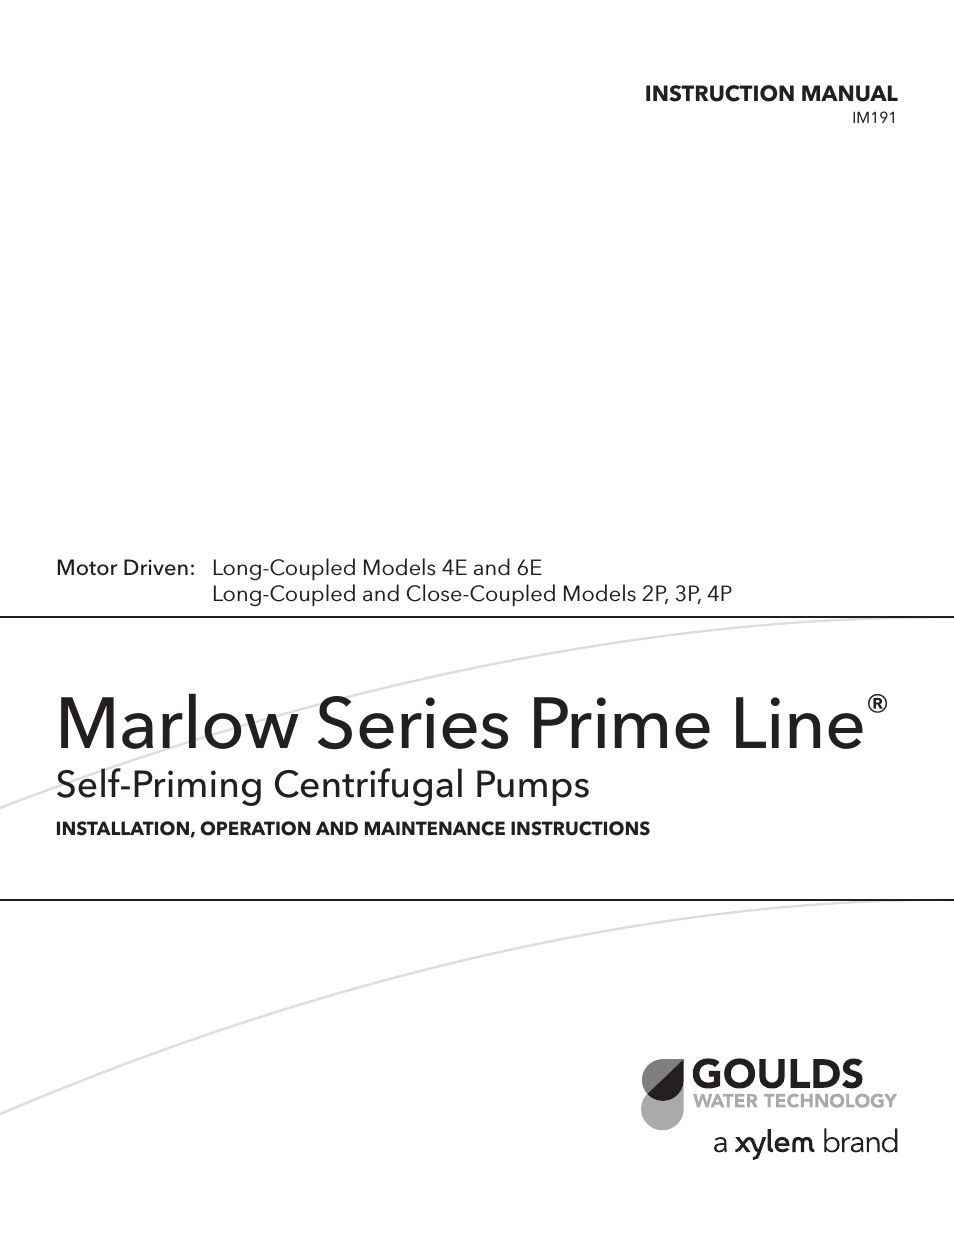 IM191 R03 Marlow Series Prime Line Self-Priming Centrifugal Pumps